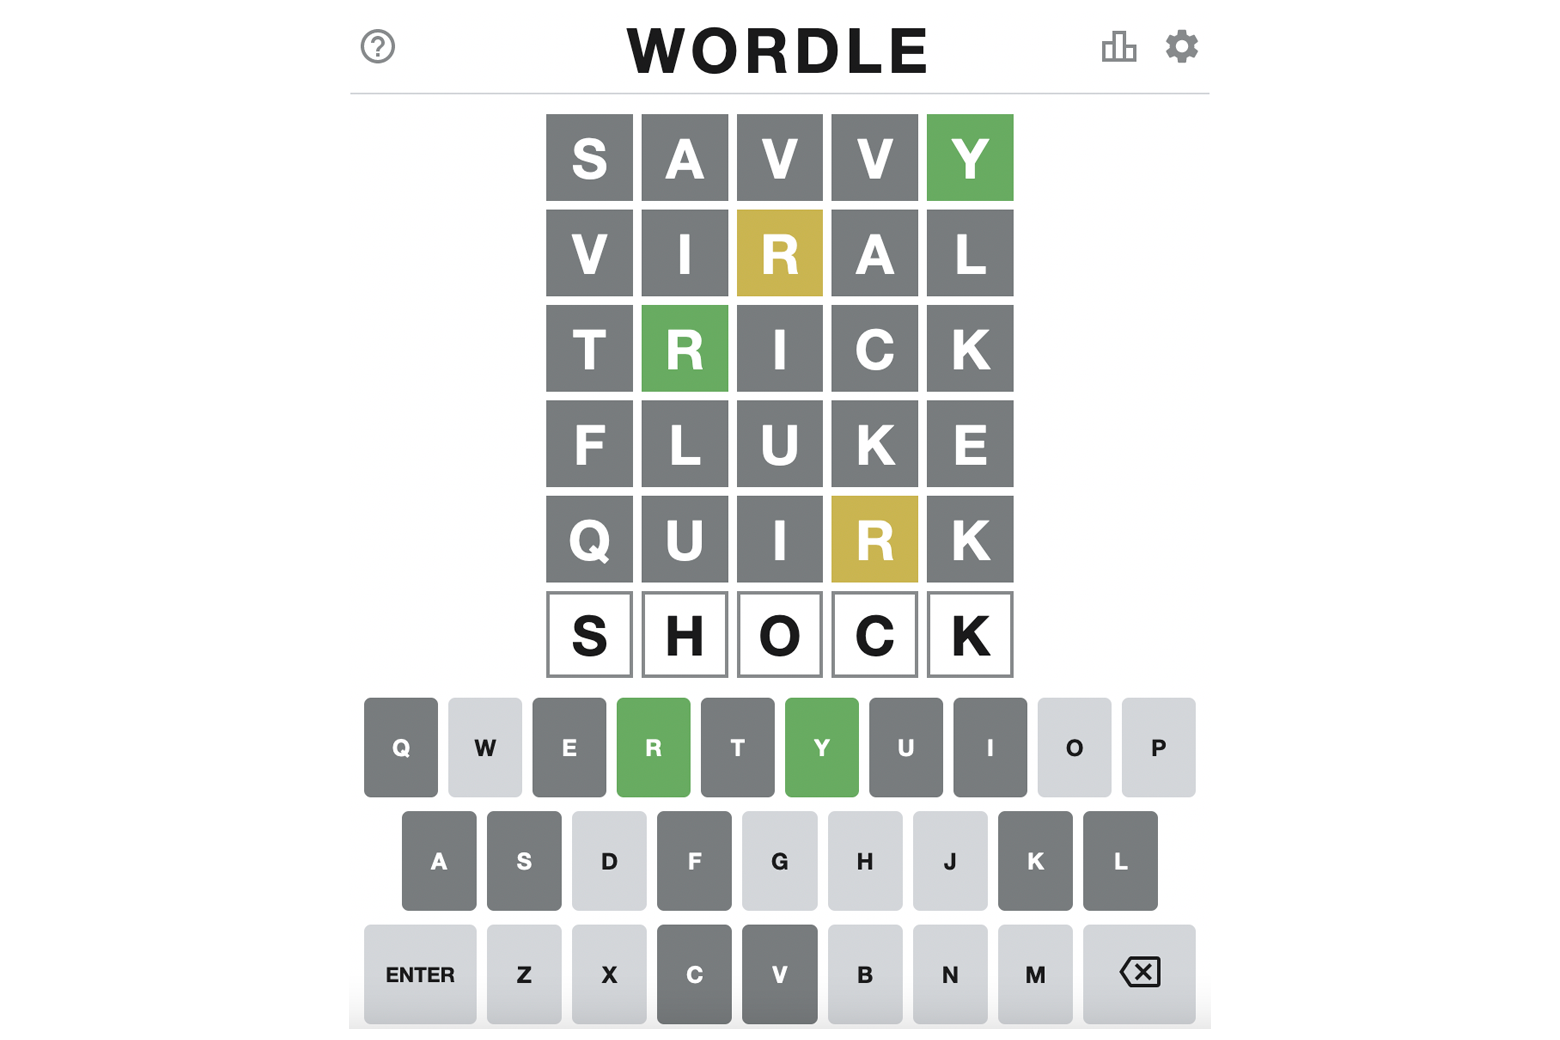 A Wordle grid